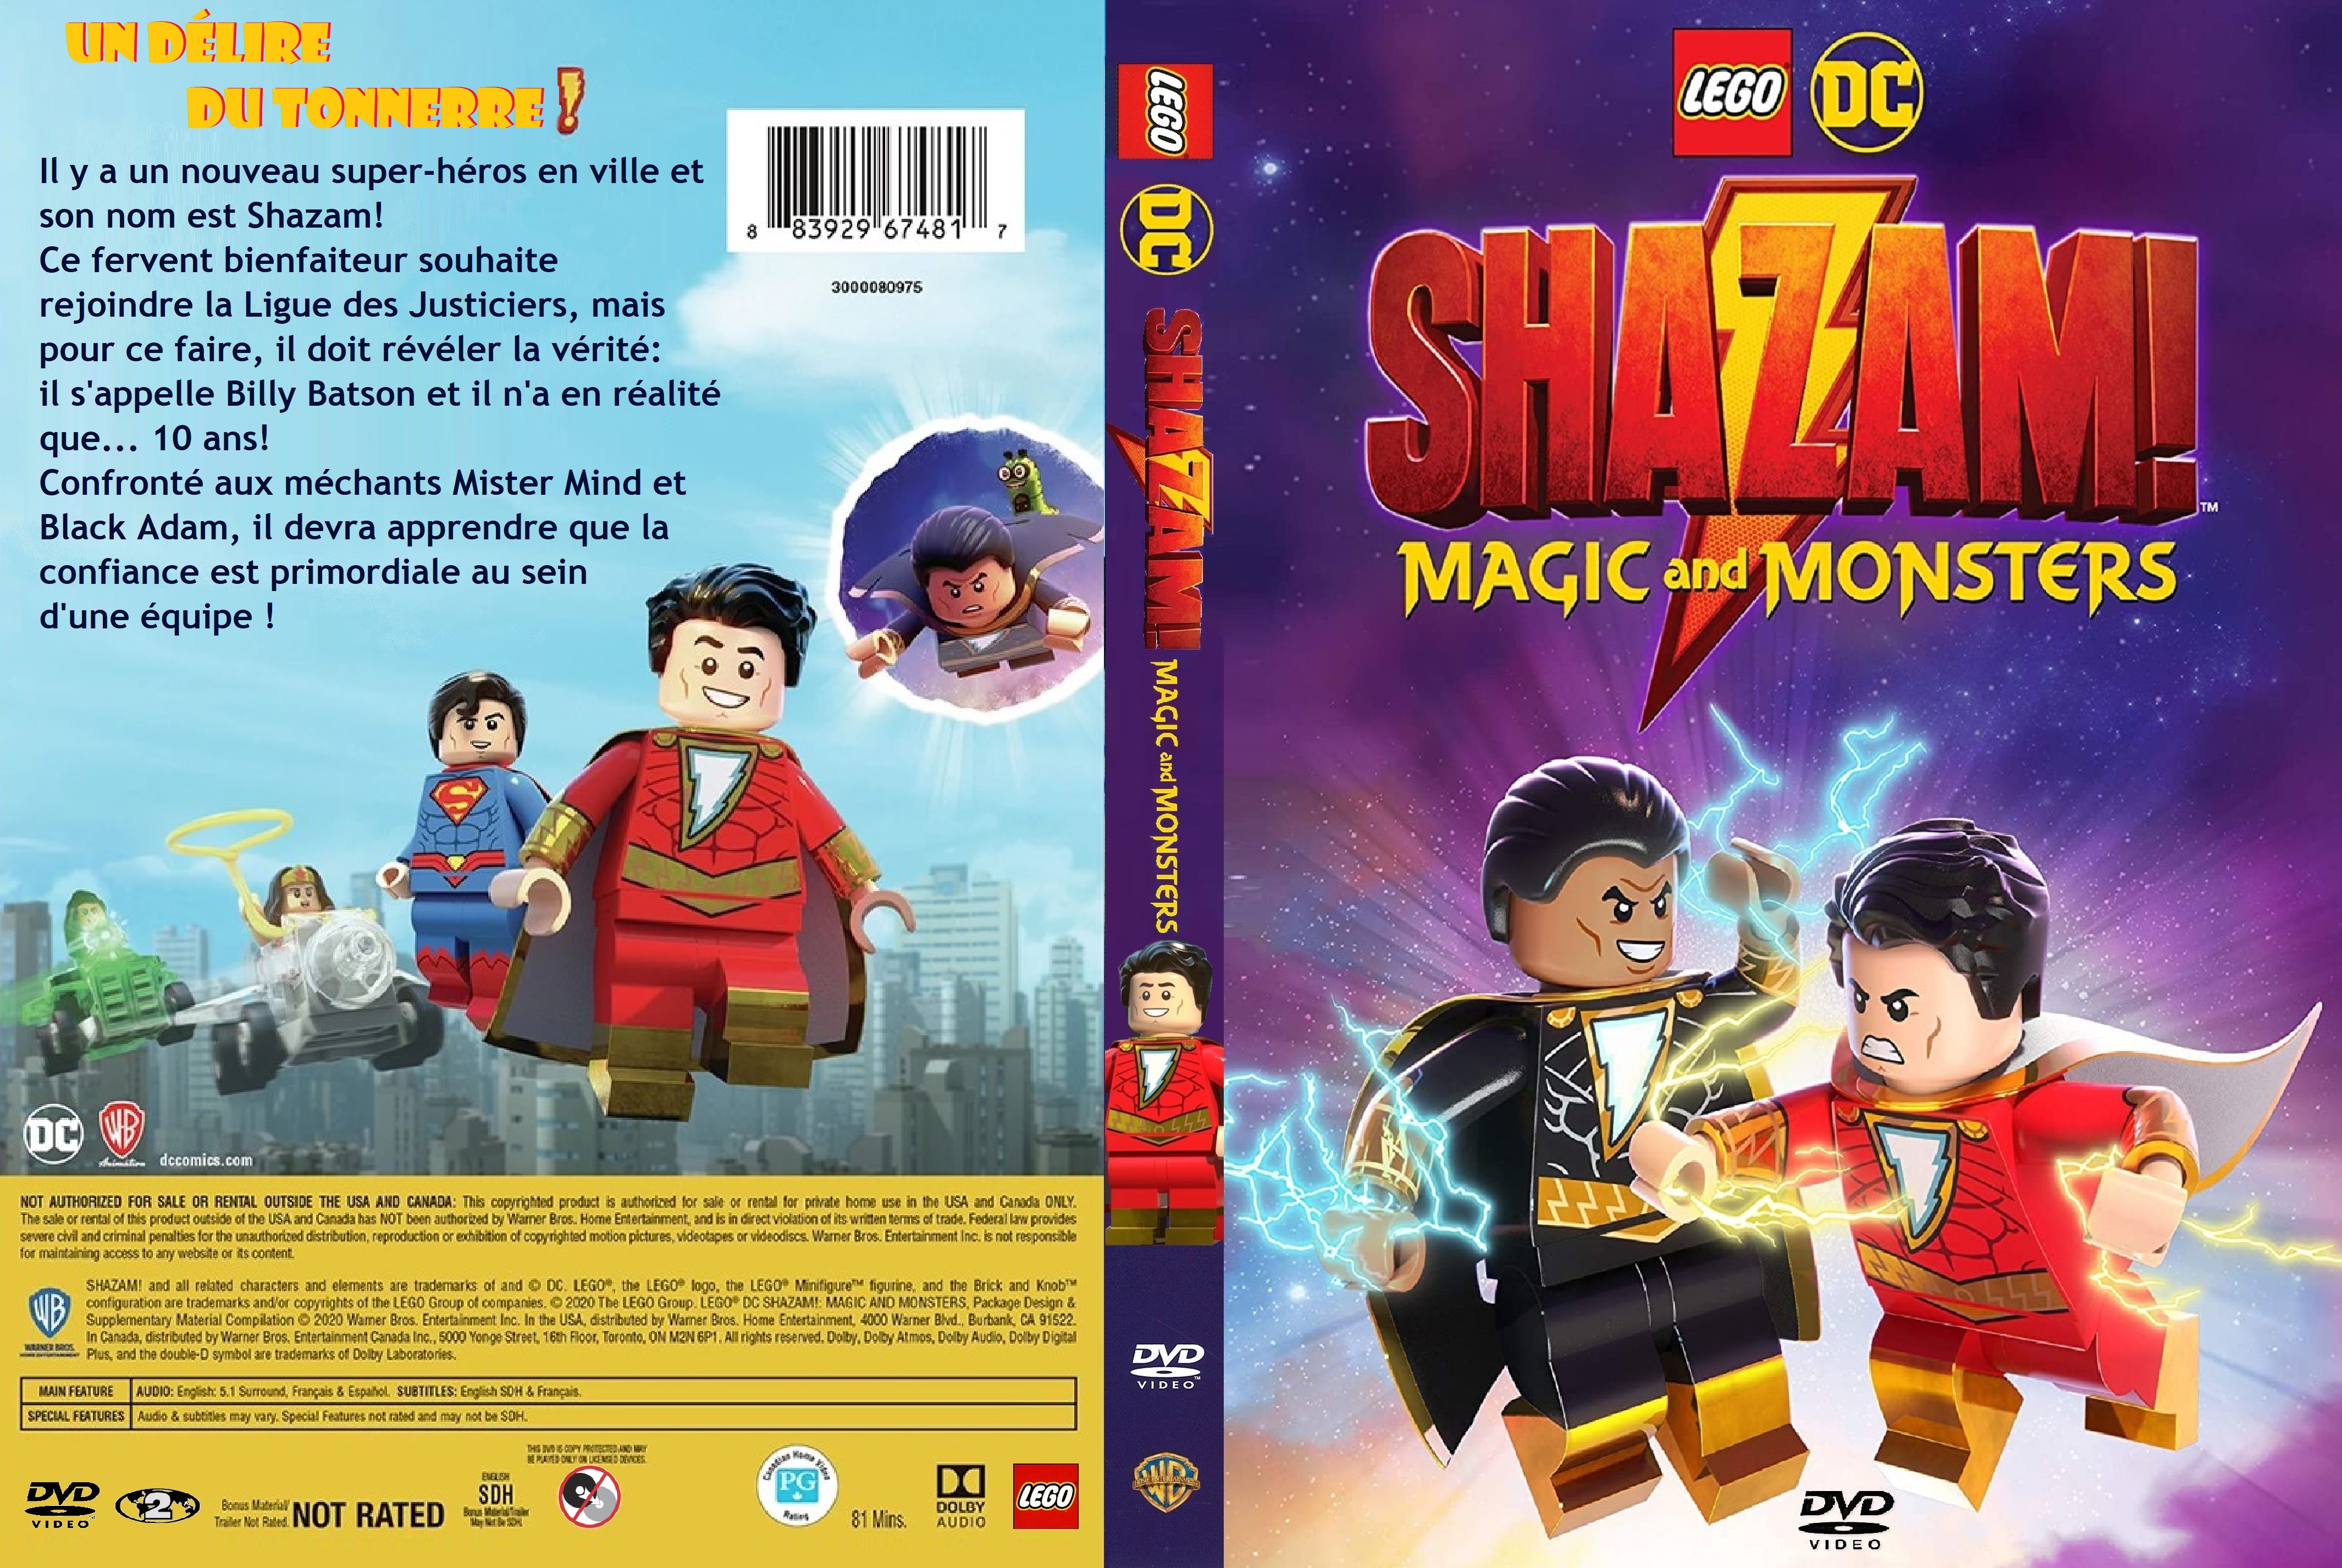 Jaquette DVD Lego DC Shazam! Monstres et Magie custom